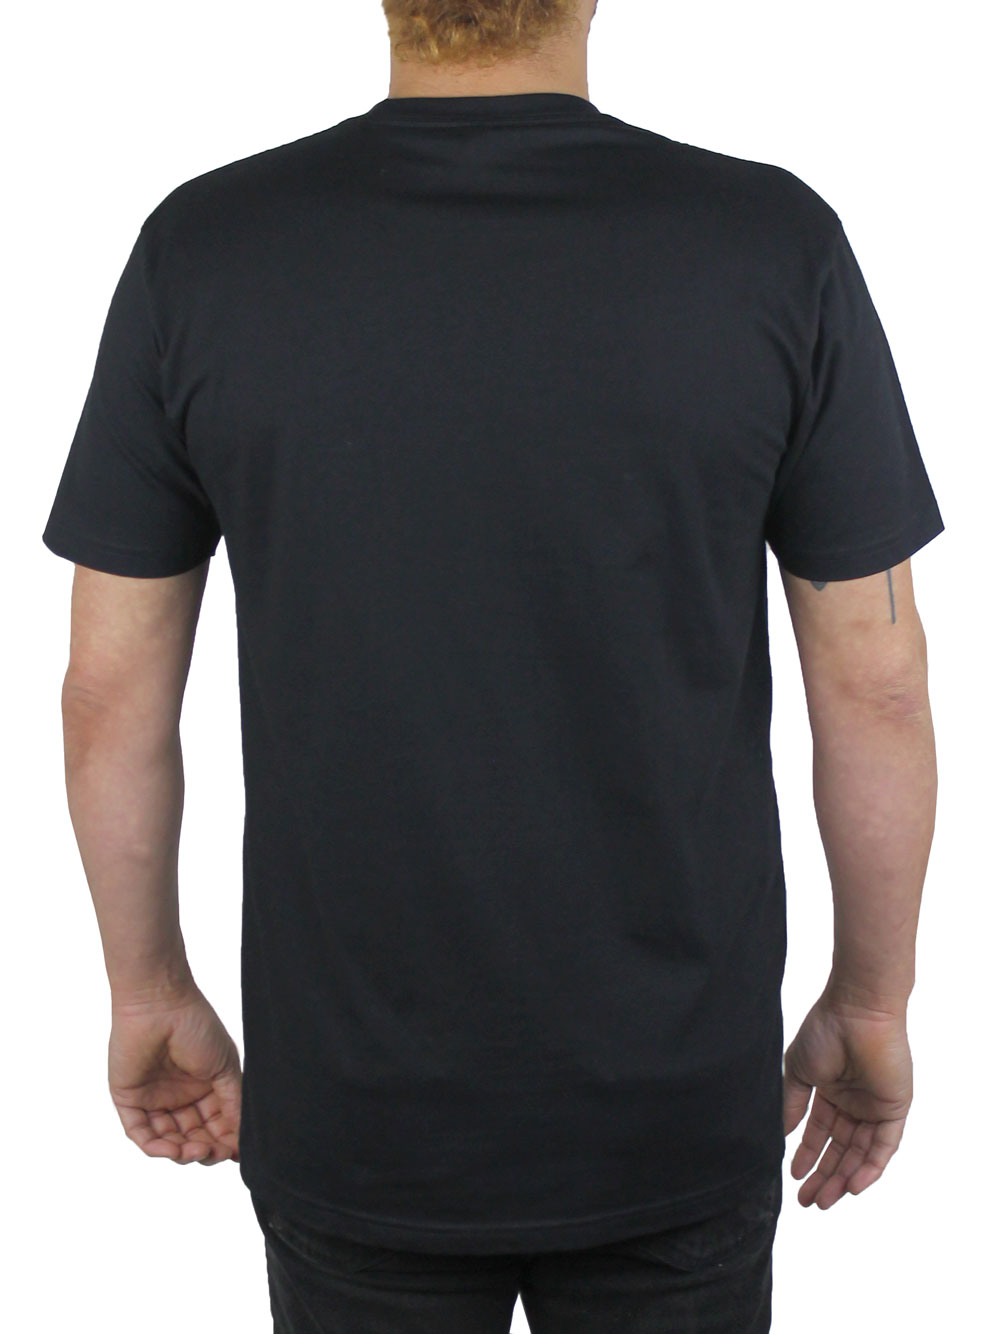 Tuxedo T-Shirt - Black Tuxedo T-Shirt - 80's Tuxedo Shirt Men's LG